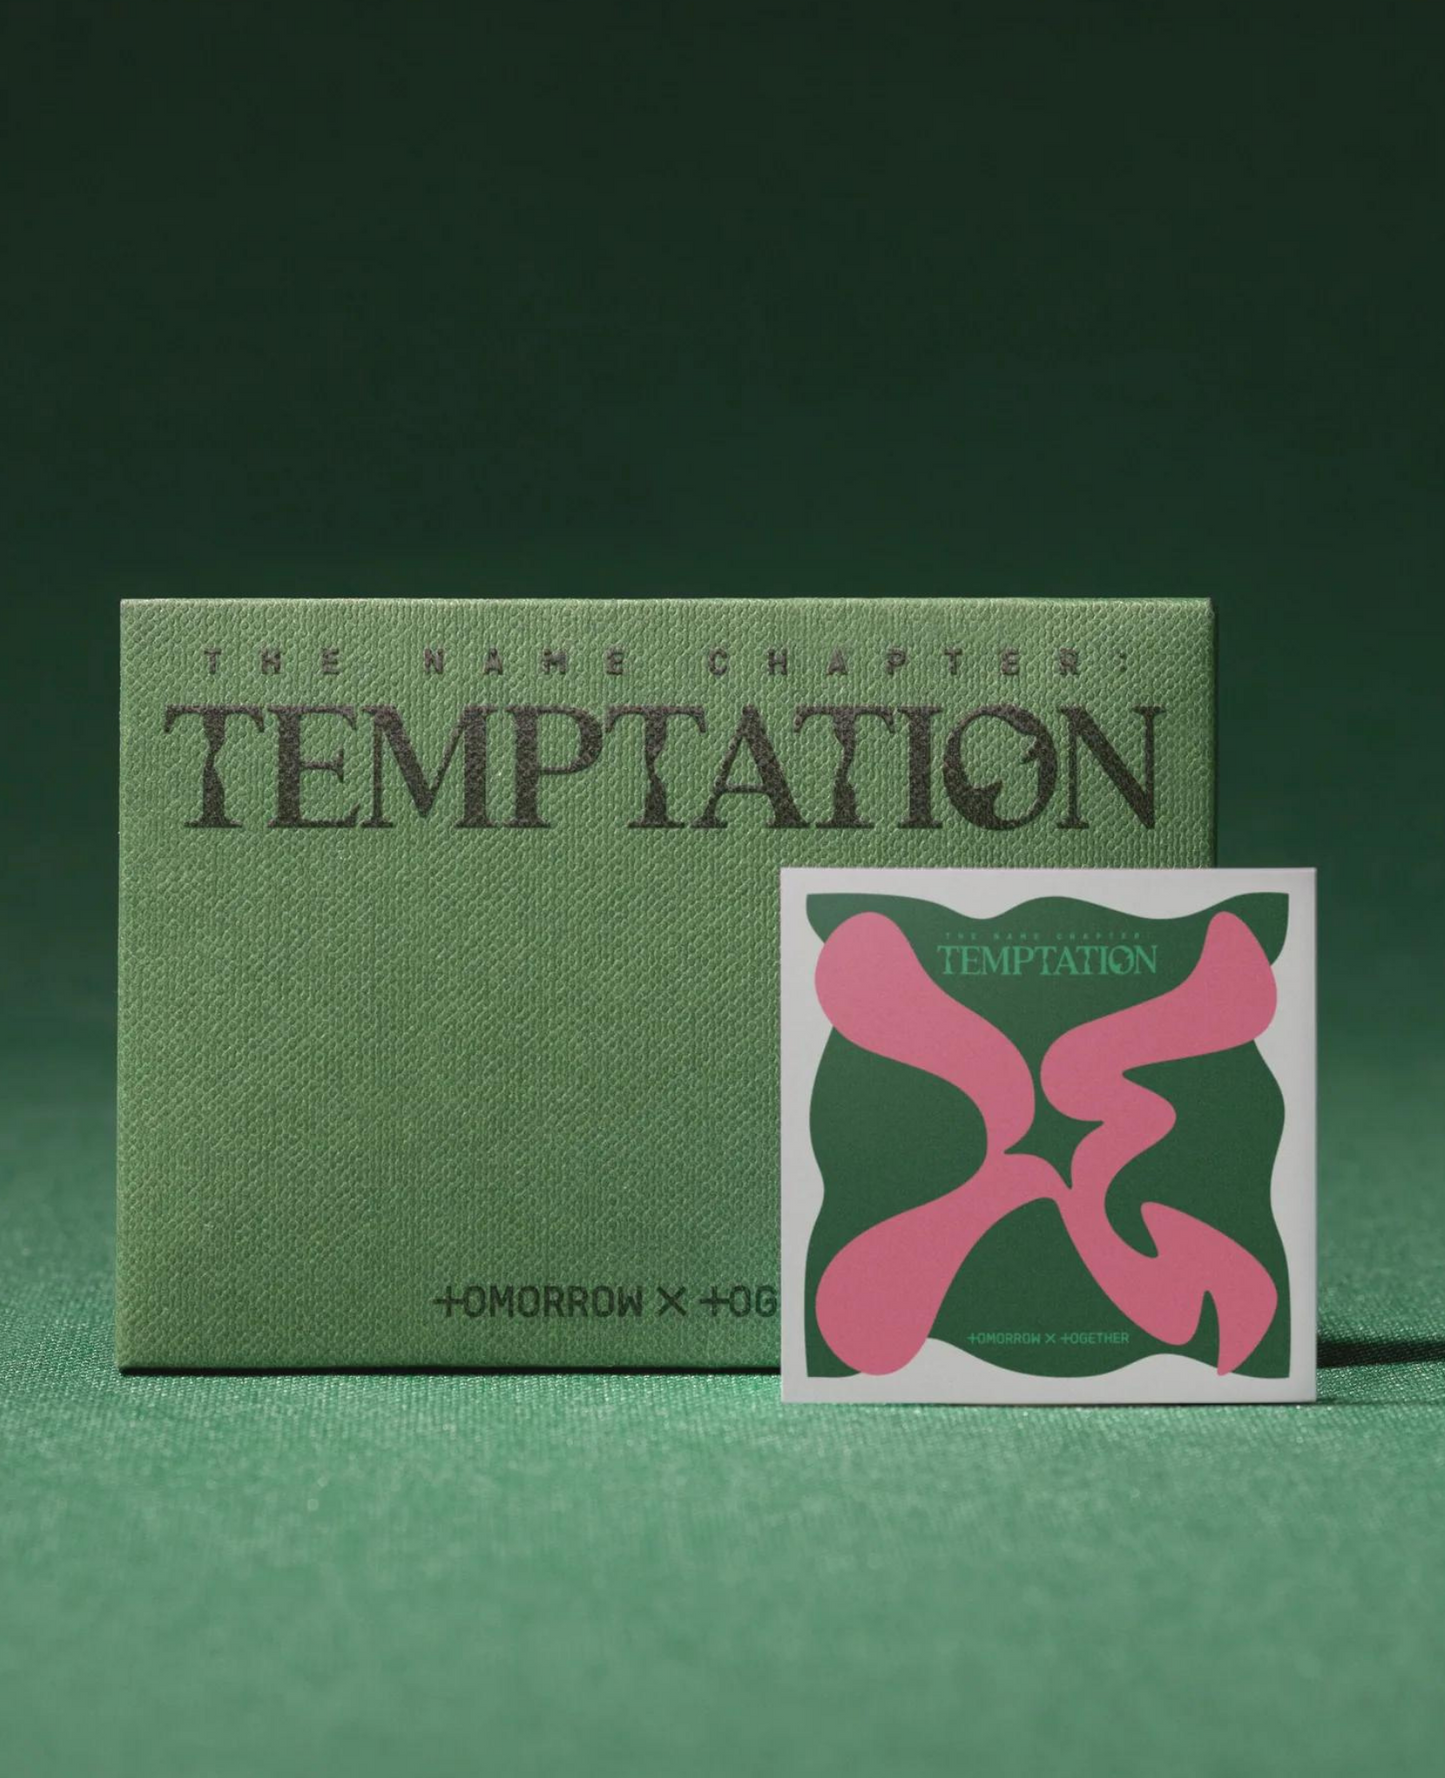 TOMORROW X TOGETHER (TXT) - 이름의 장: TEMPTATION (Weverse Album ver.) TOMORROW X TOGETHER